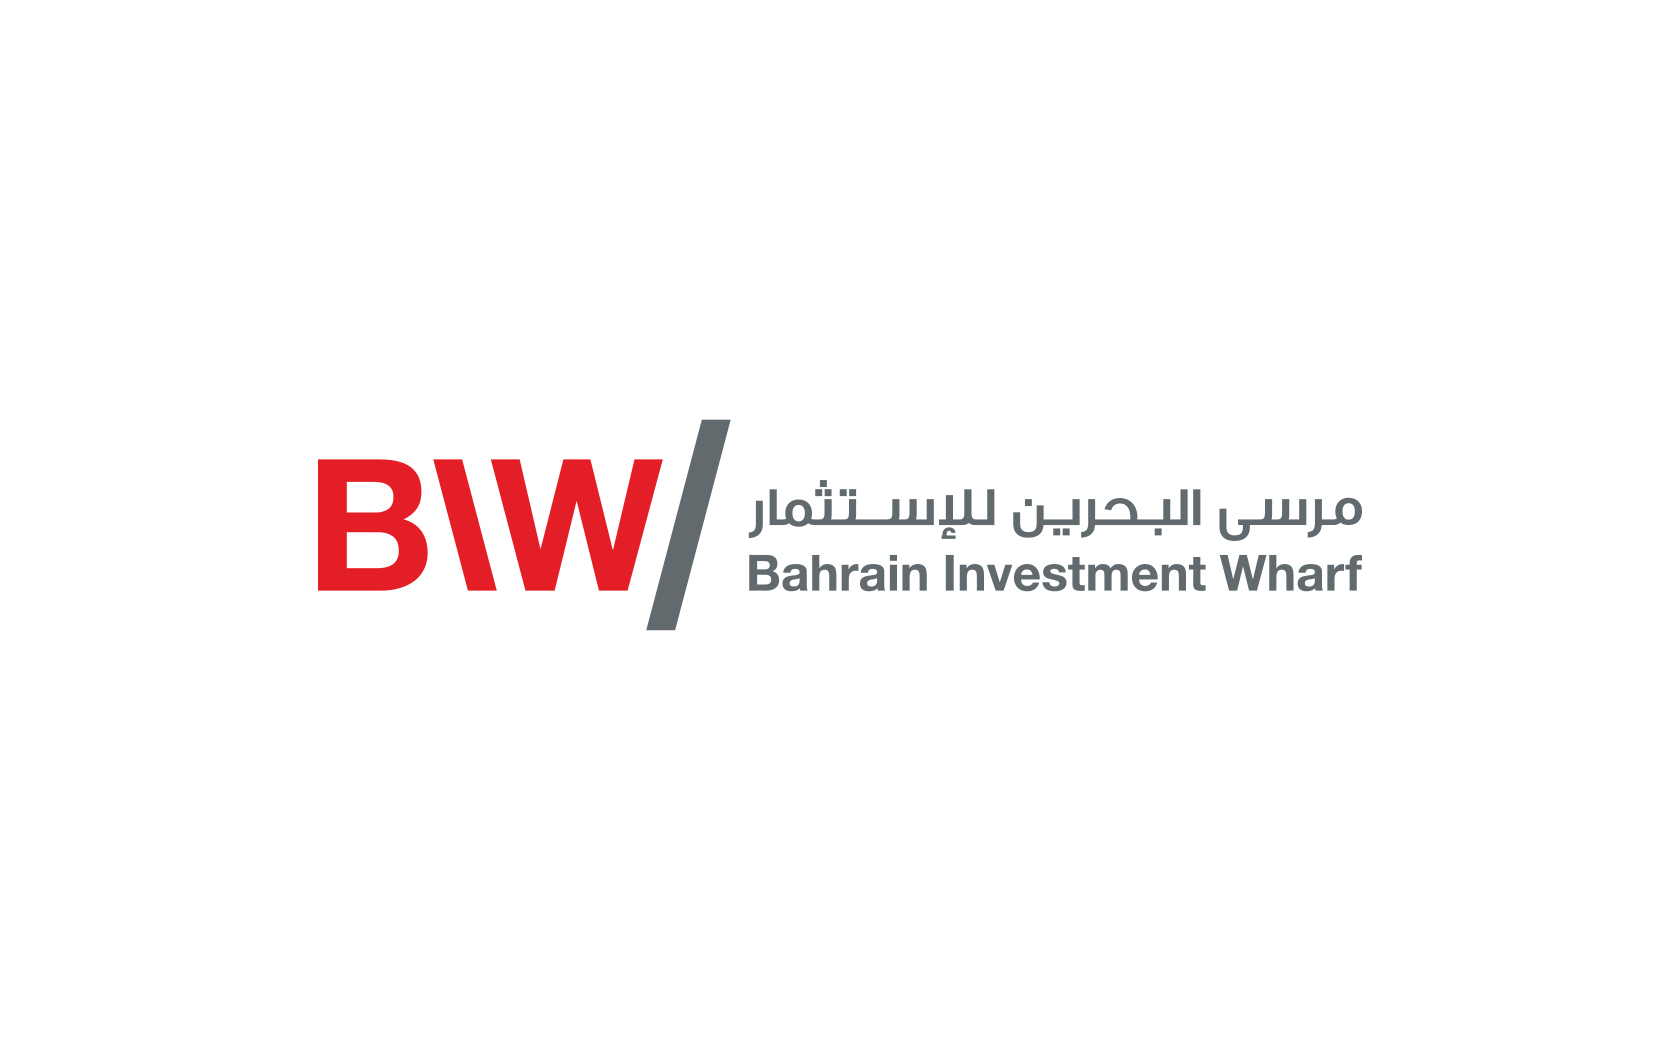 BIW. Brand logo in horizontal lockup